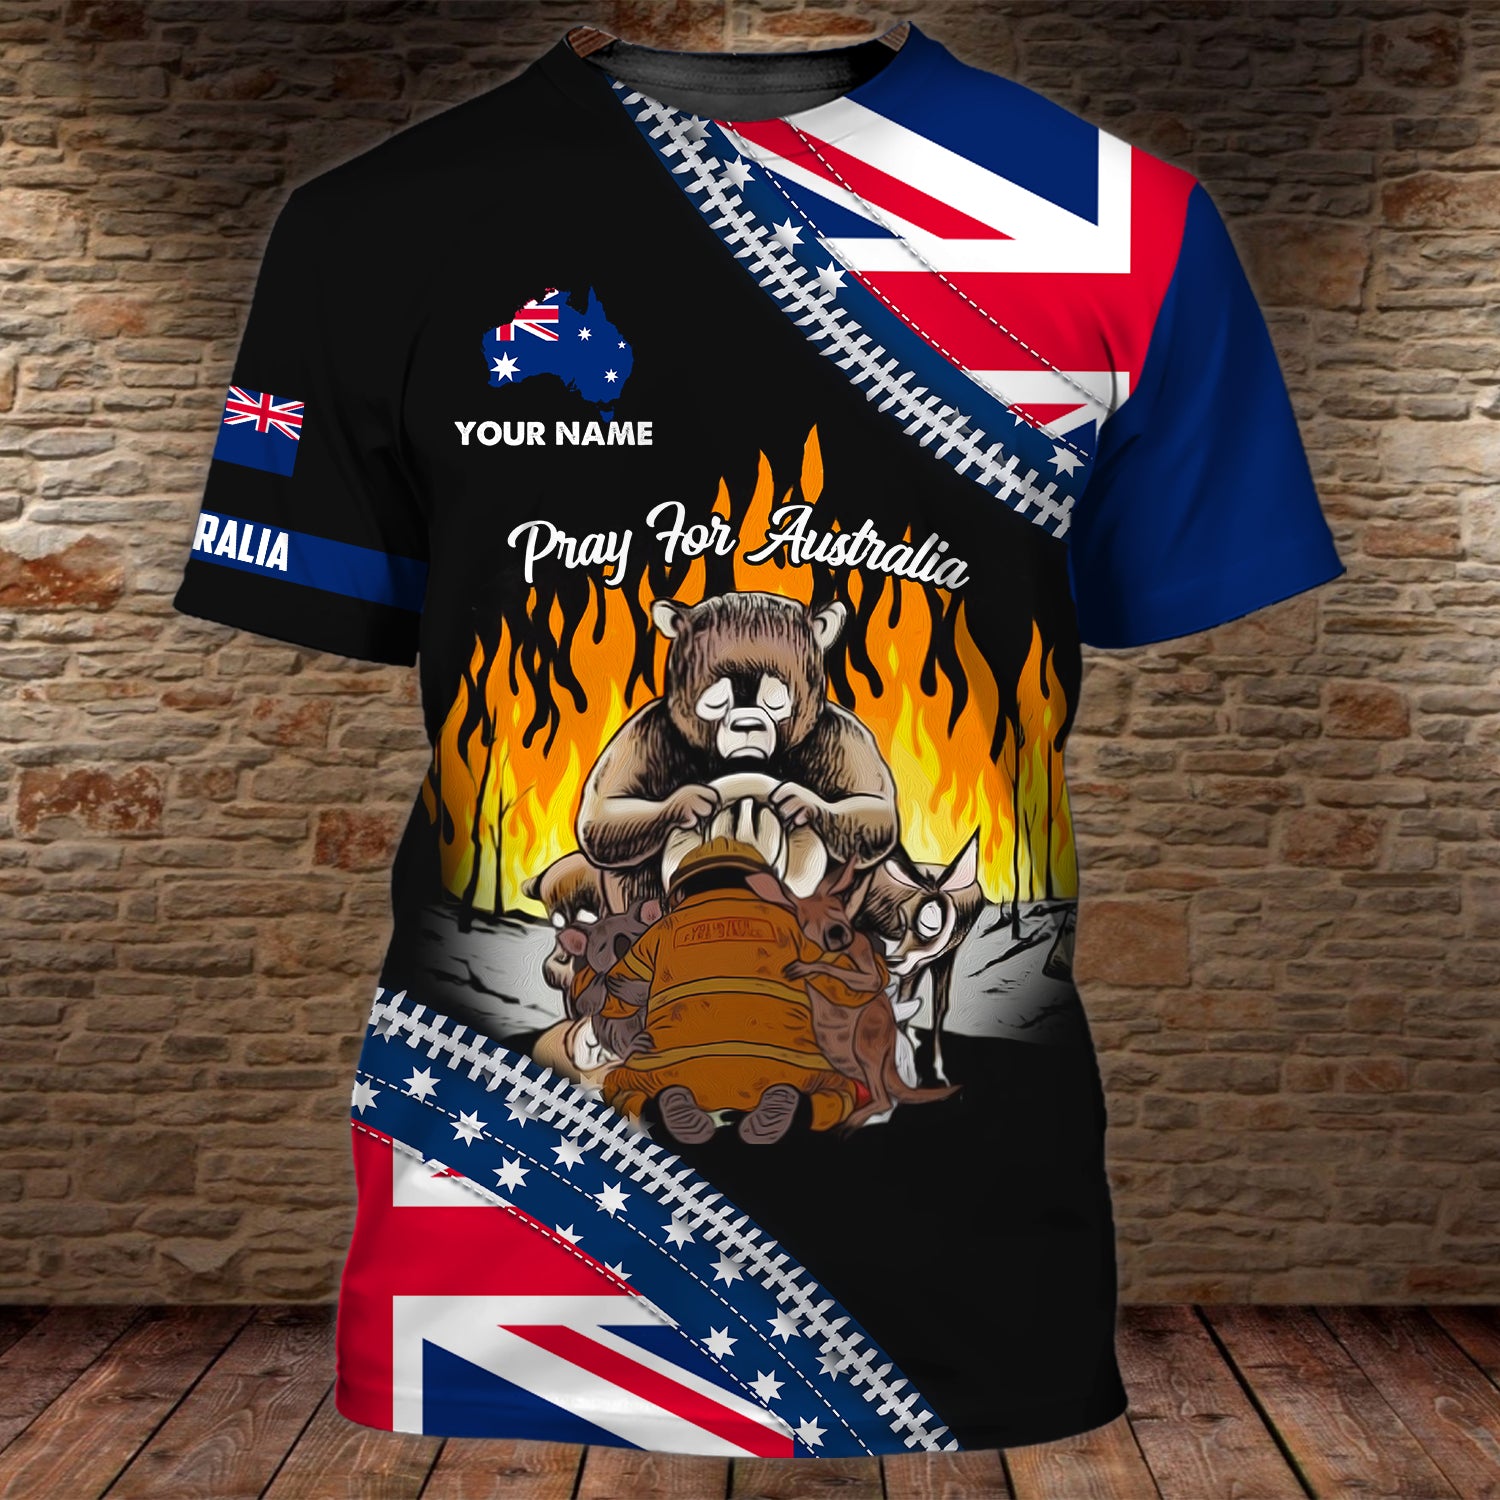 Pray For Australia - Personalized Name 3D Tshirt - Nsd99 8386